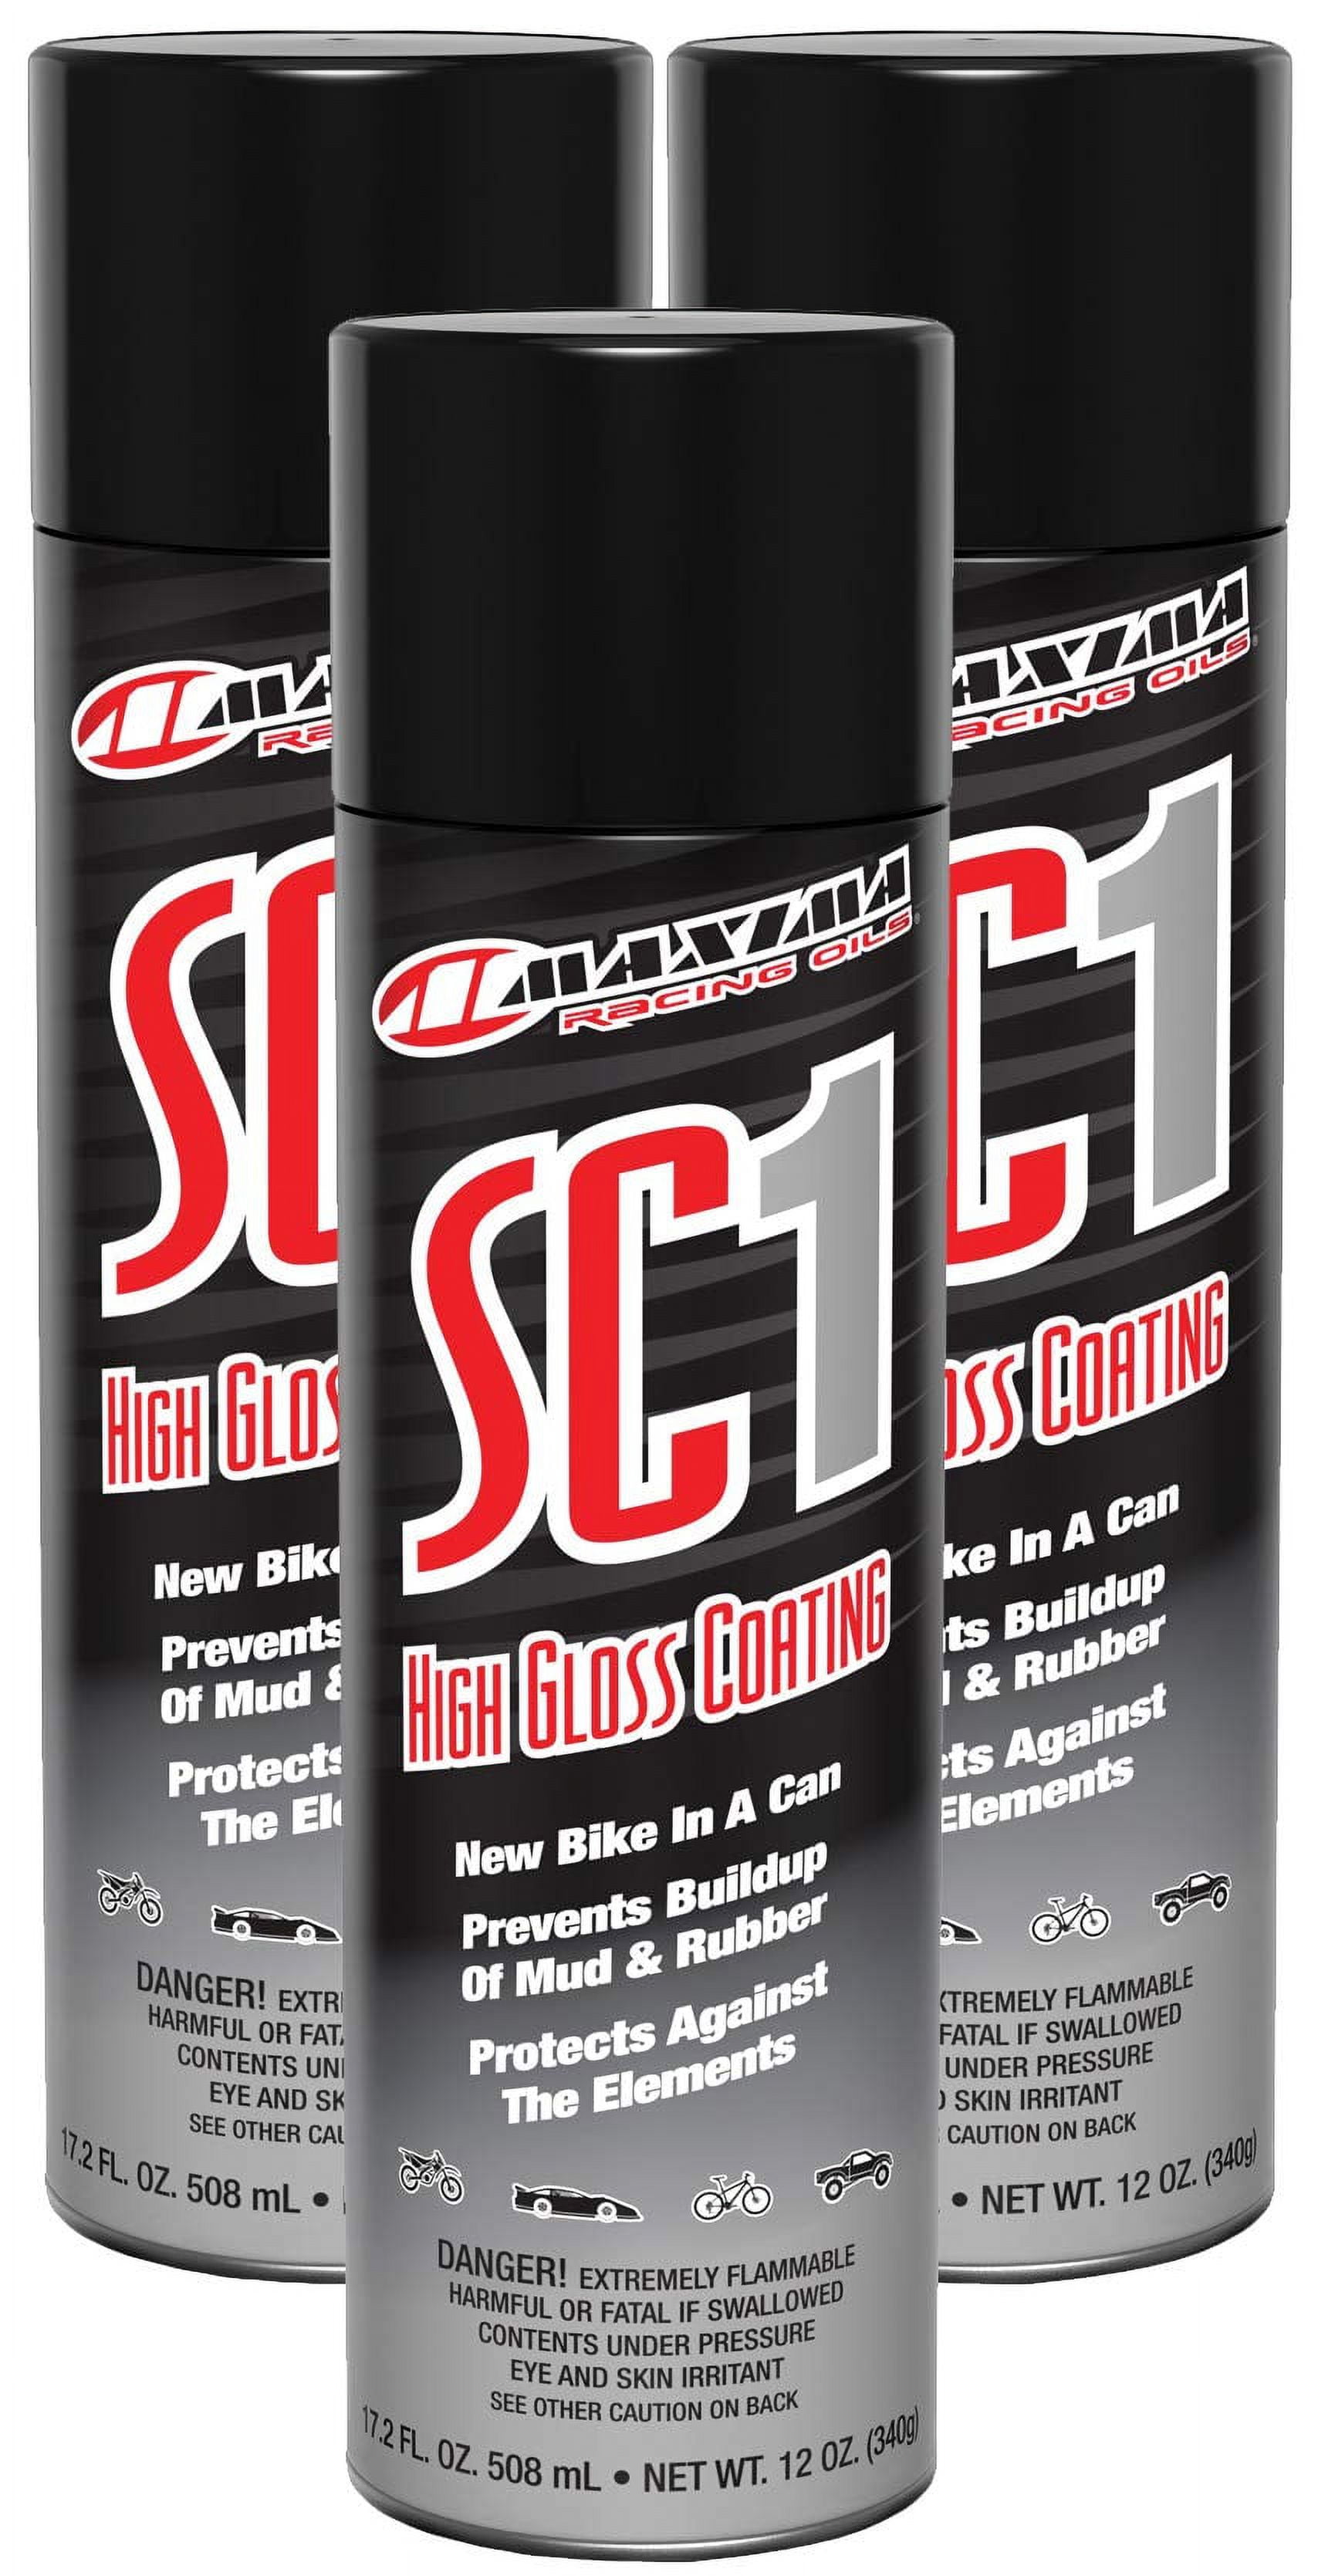 Maxima 78920 SC1 High Gloss Coating 17.2 fl. oz. 508 ml - Net Wt. 12 oz Cleaner (10-Pack) + Scented Air Freshener (10-Pack)